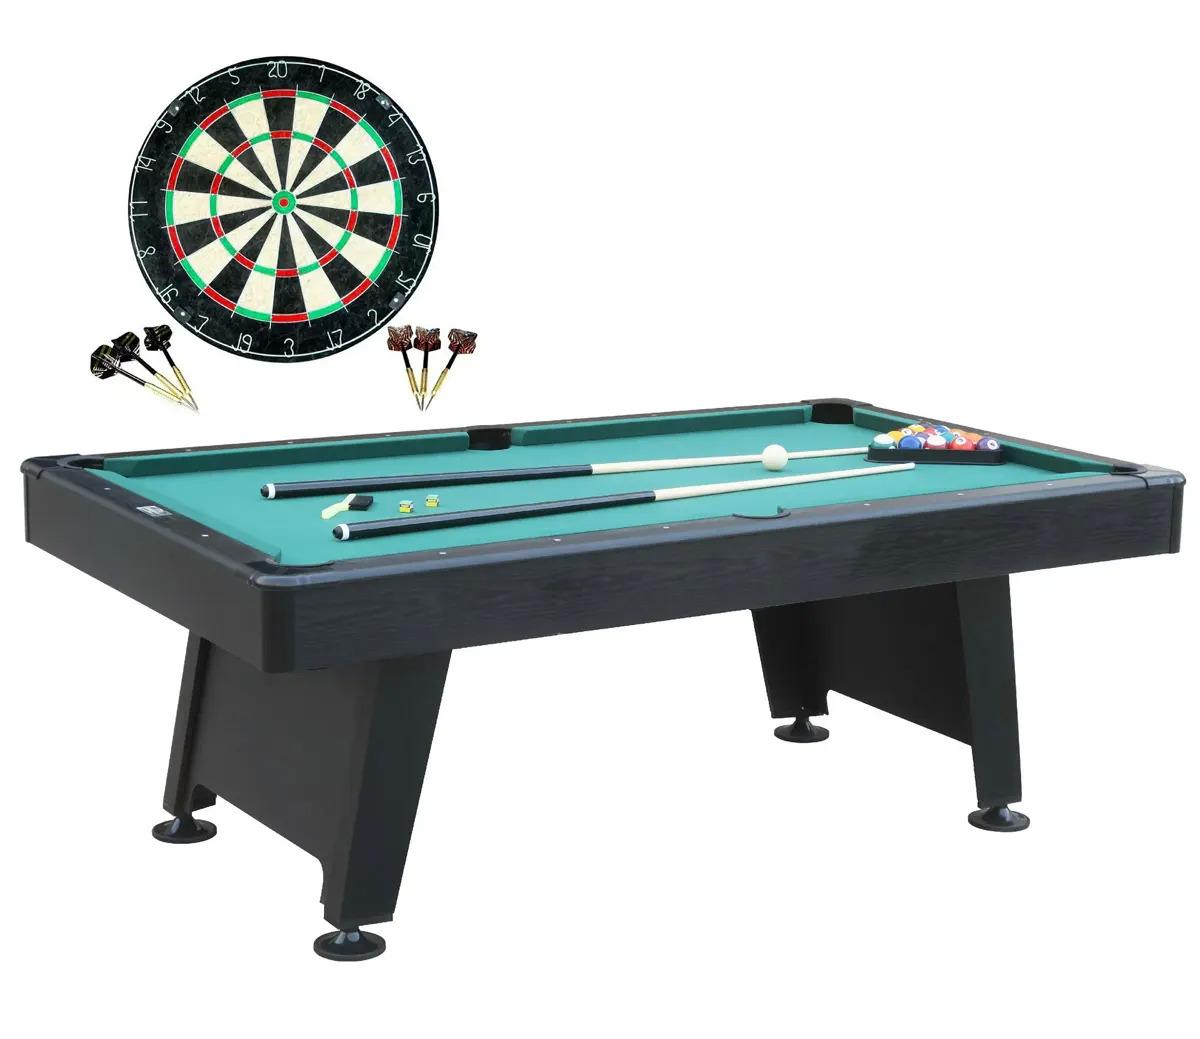 84in Barrington Billiard Arcade Pool Table for $300 Shipped